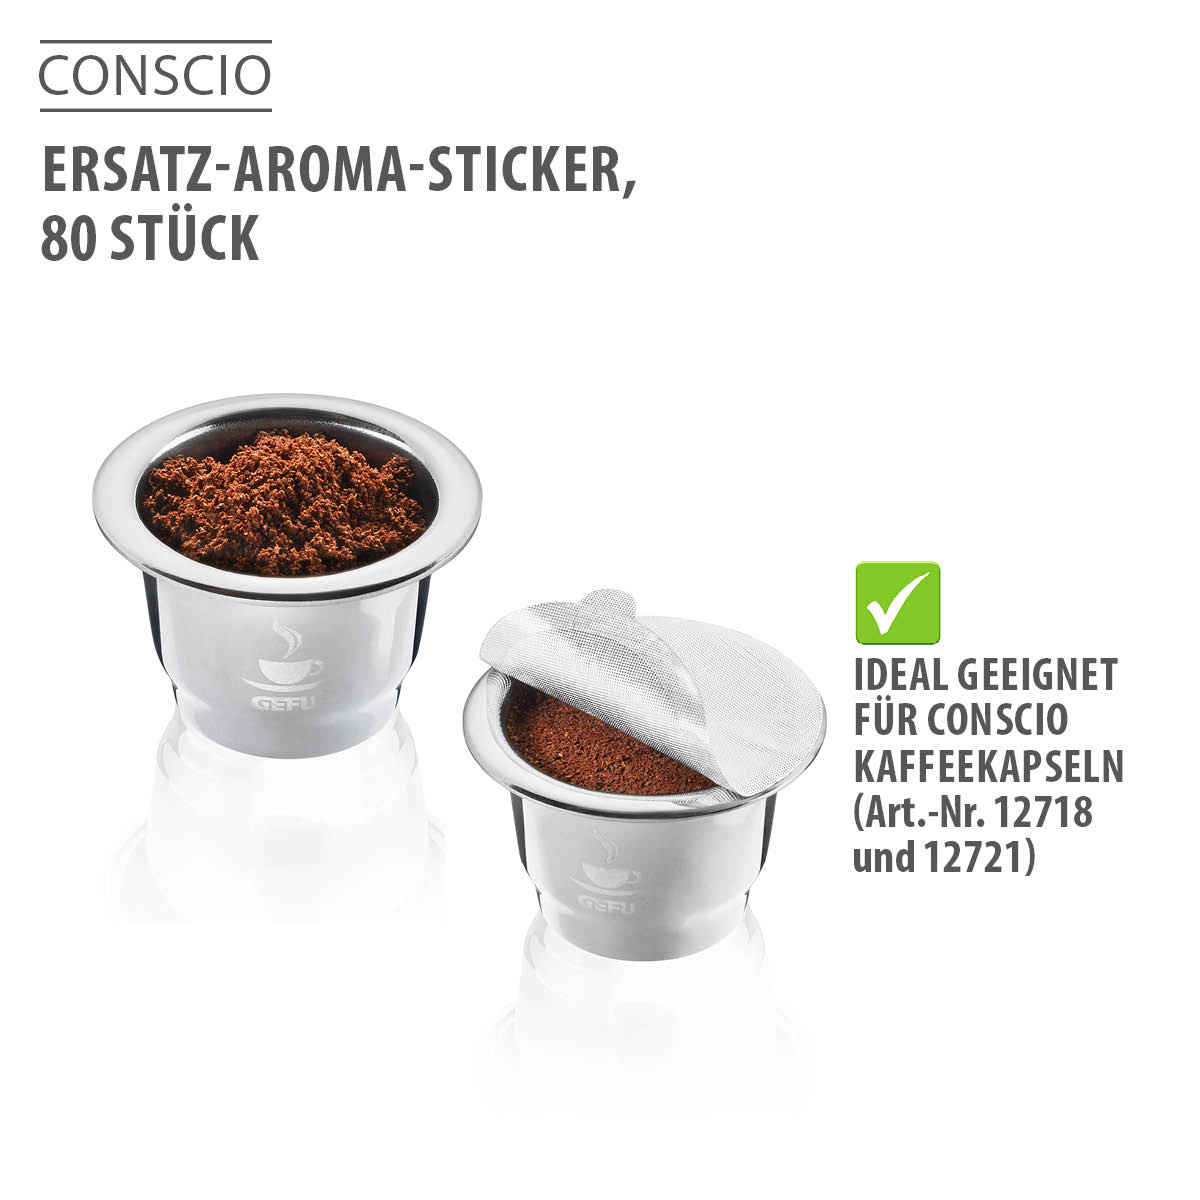 Ersatz-Aroma-Sticker CONSCIO, 80 Stück